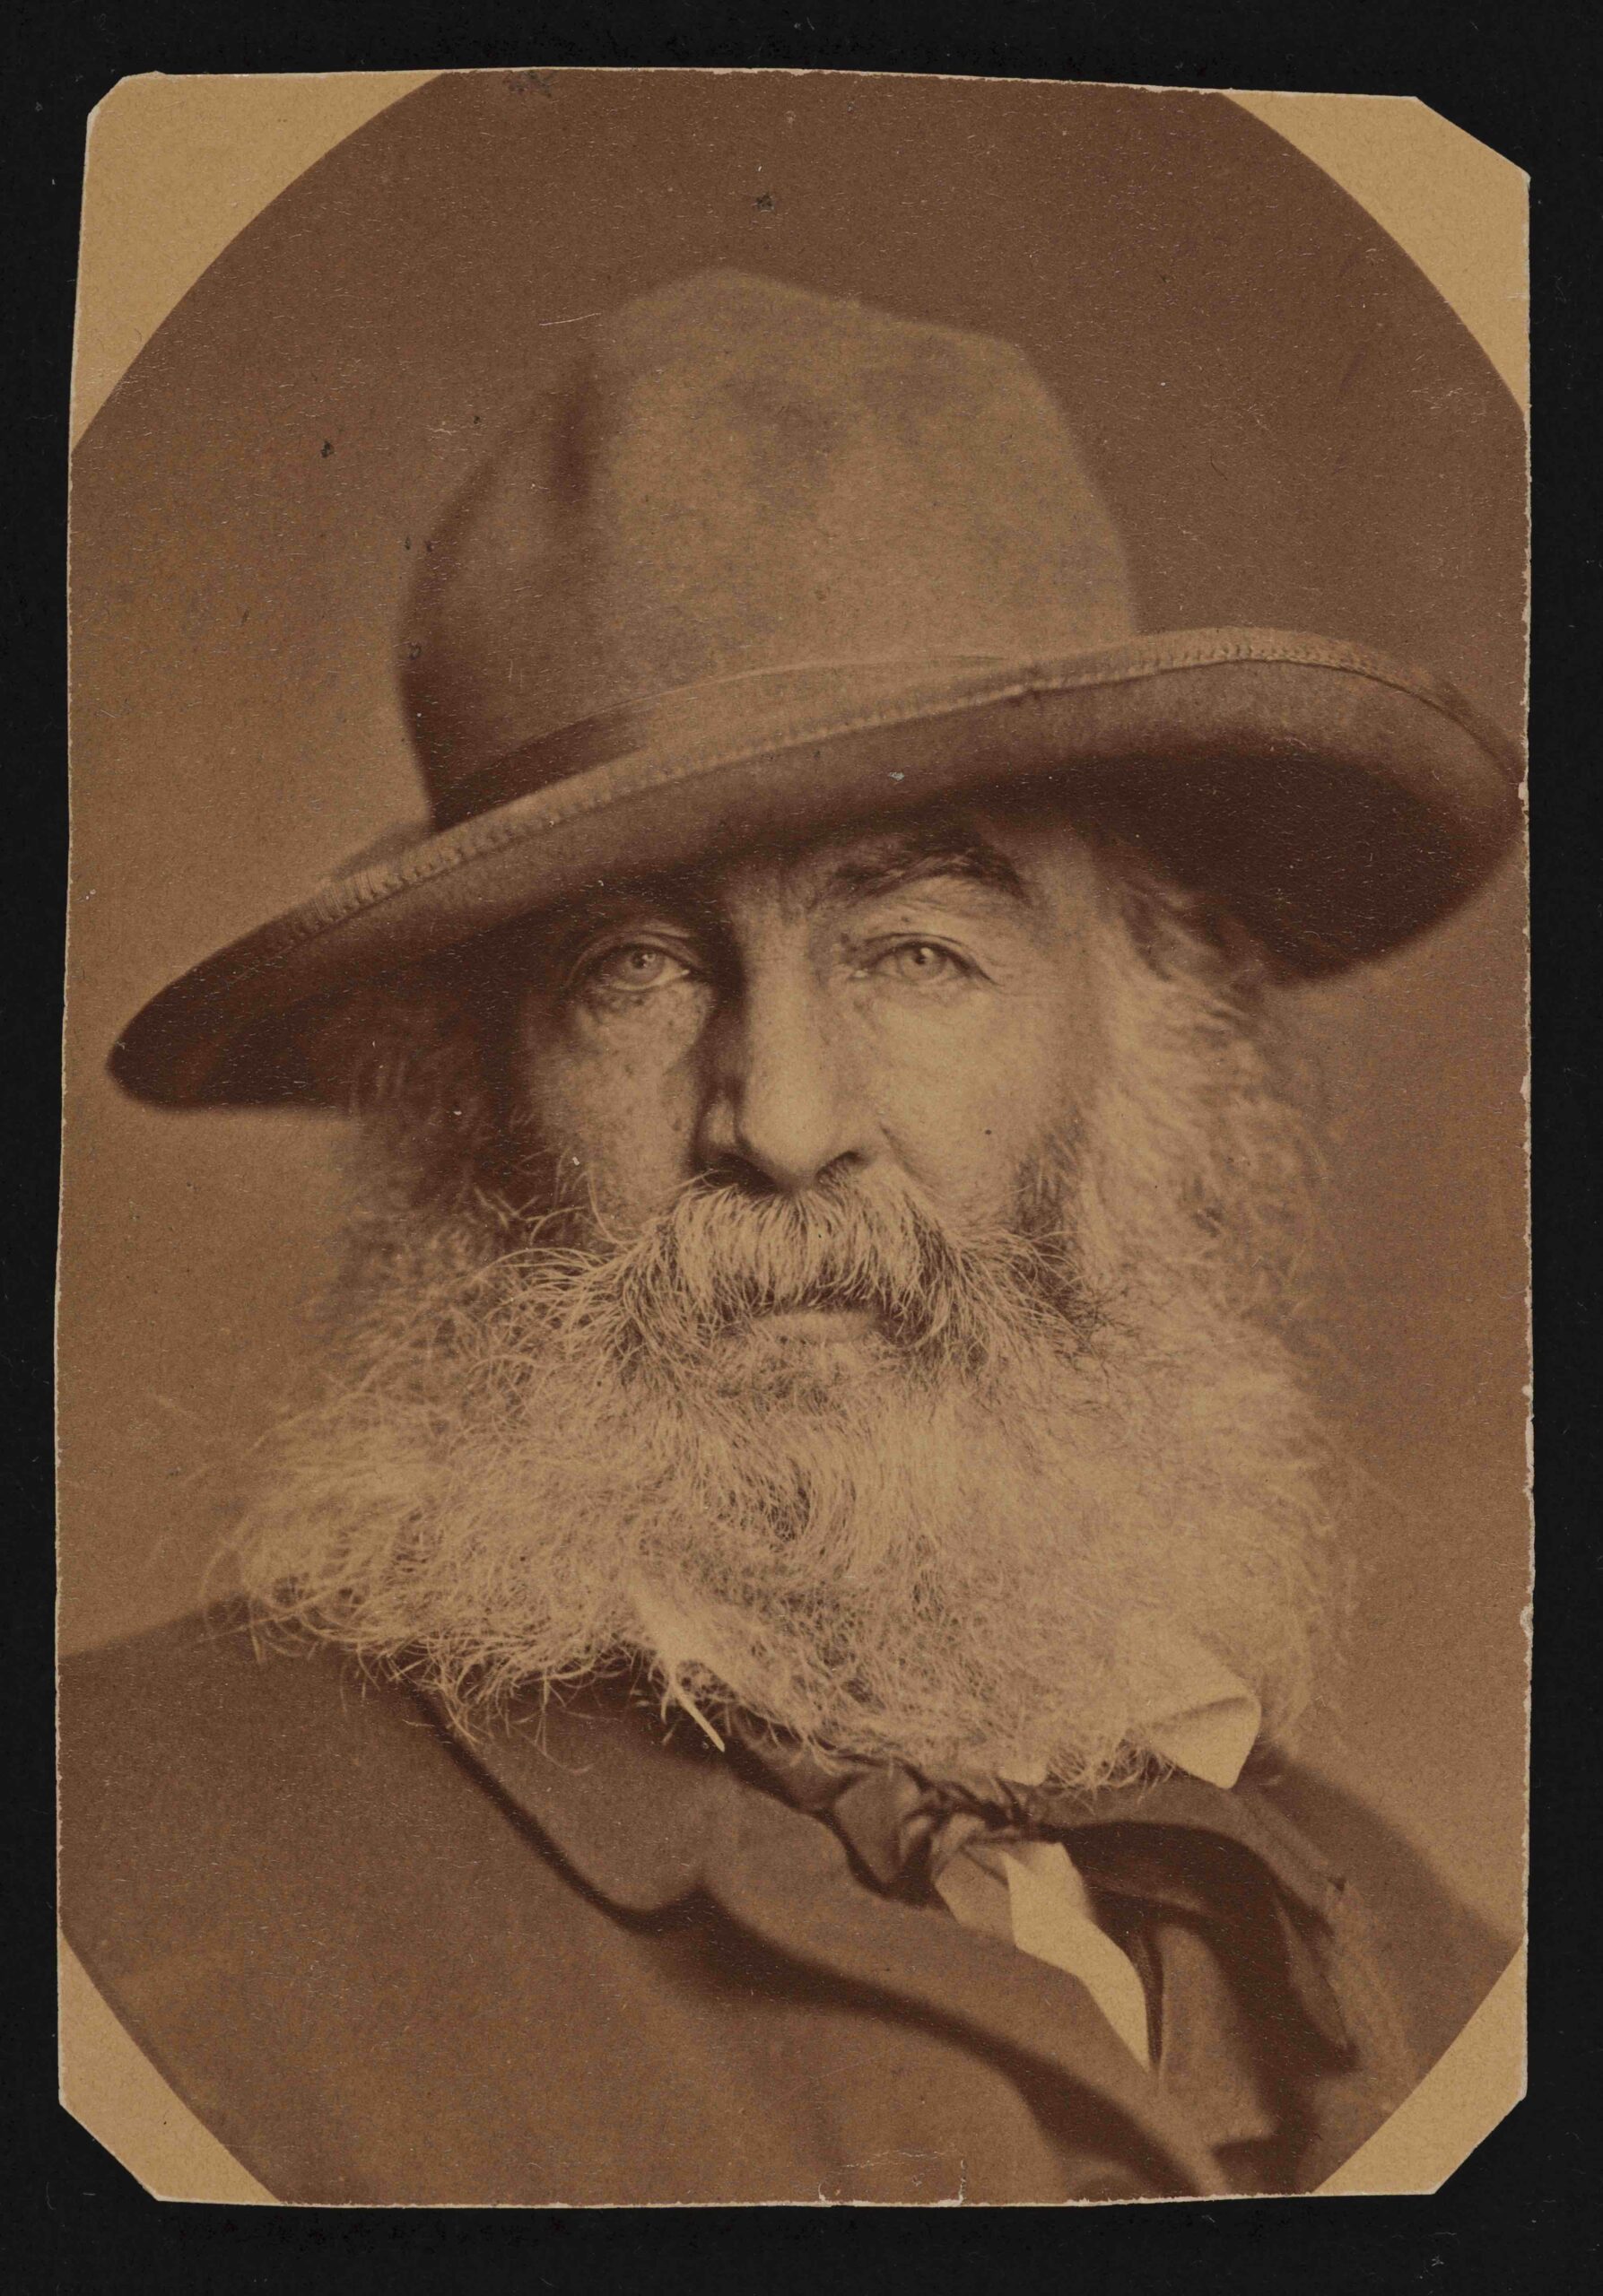 Undiscovered Walt Whitman photo.